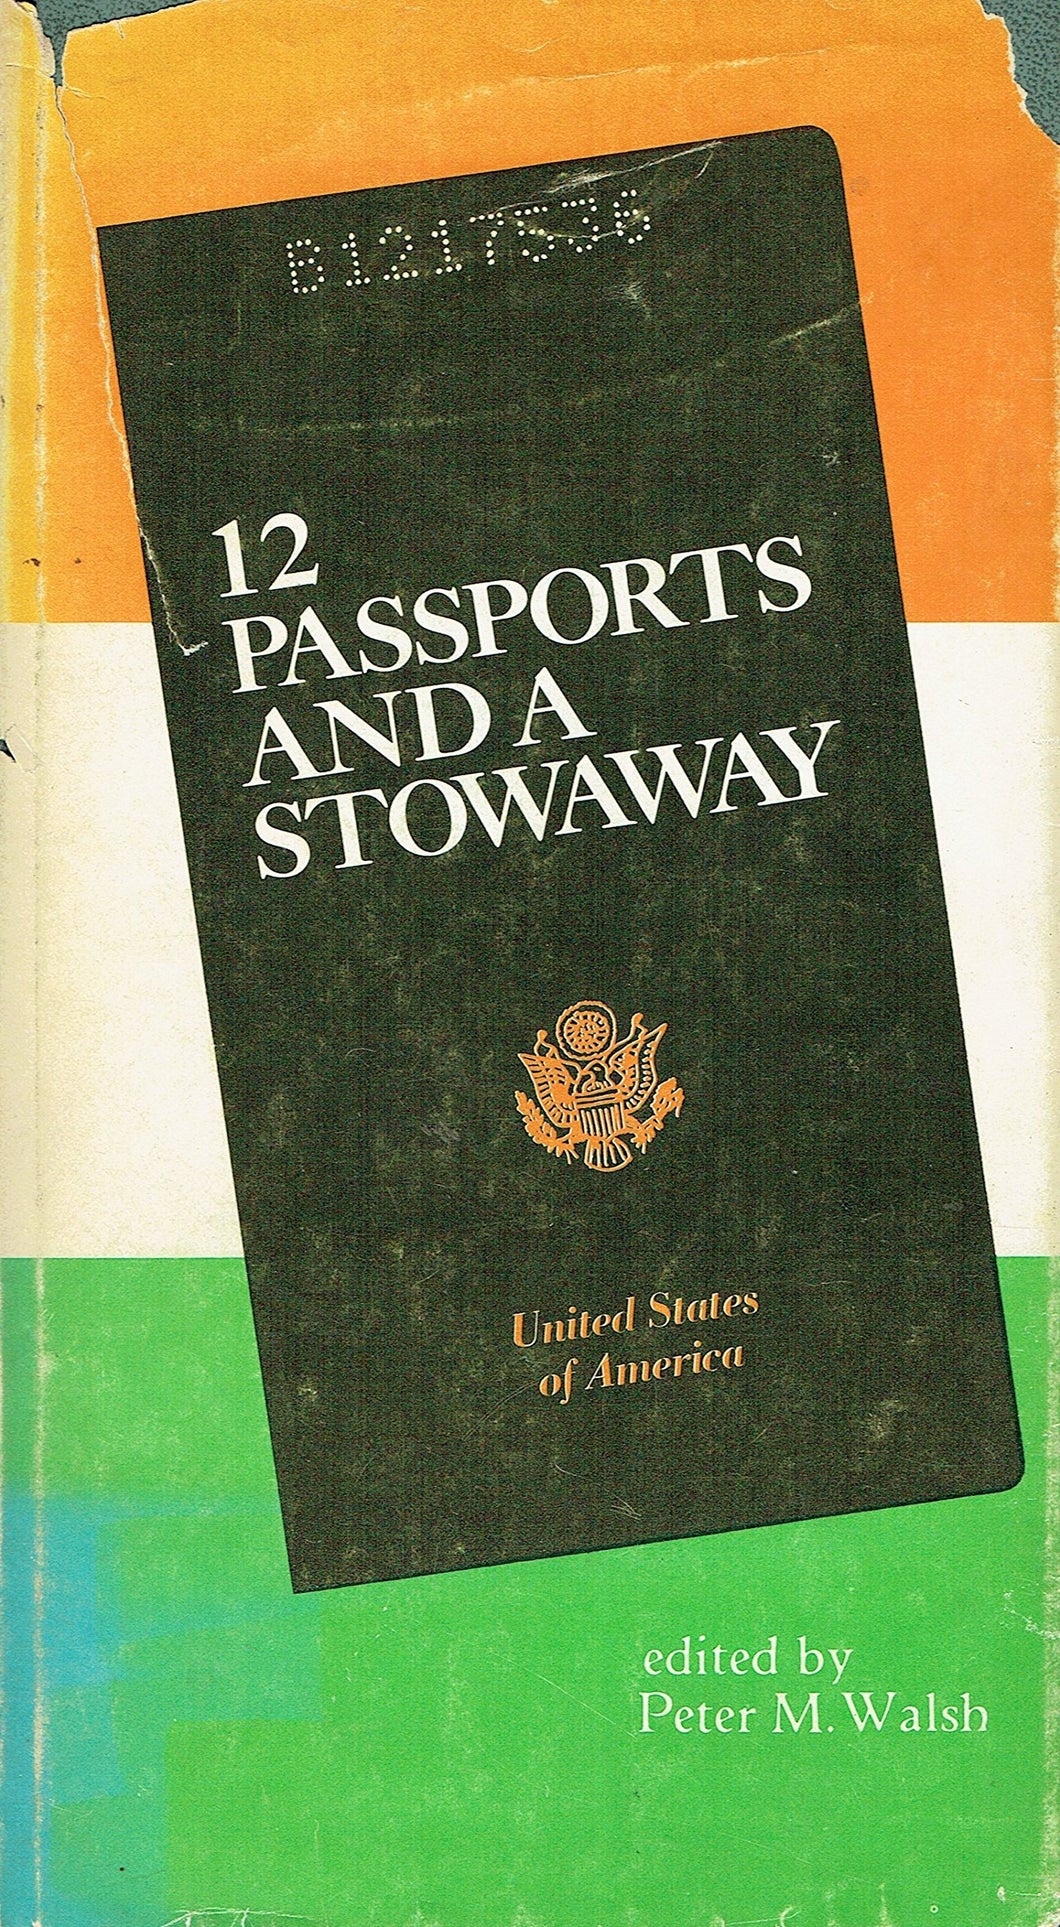 12 PASSPORTS AND A STOWAWAY